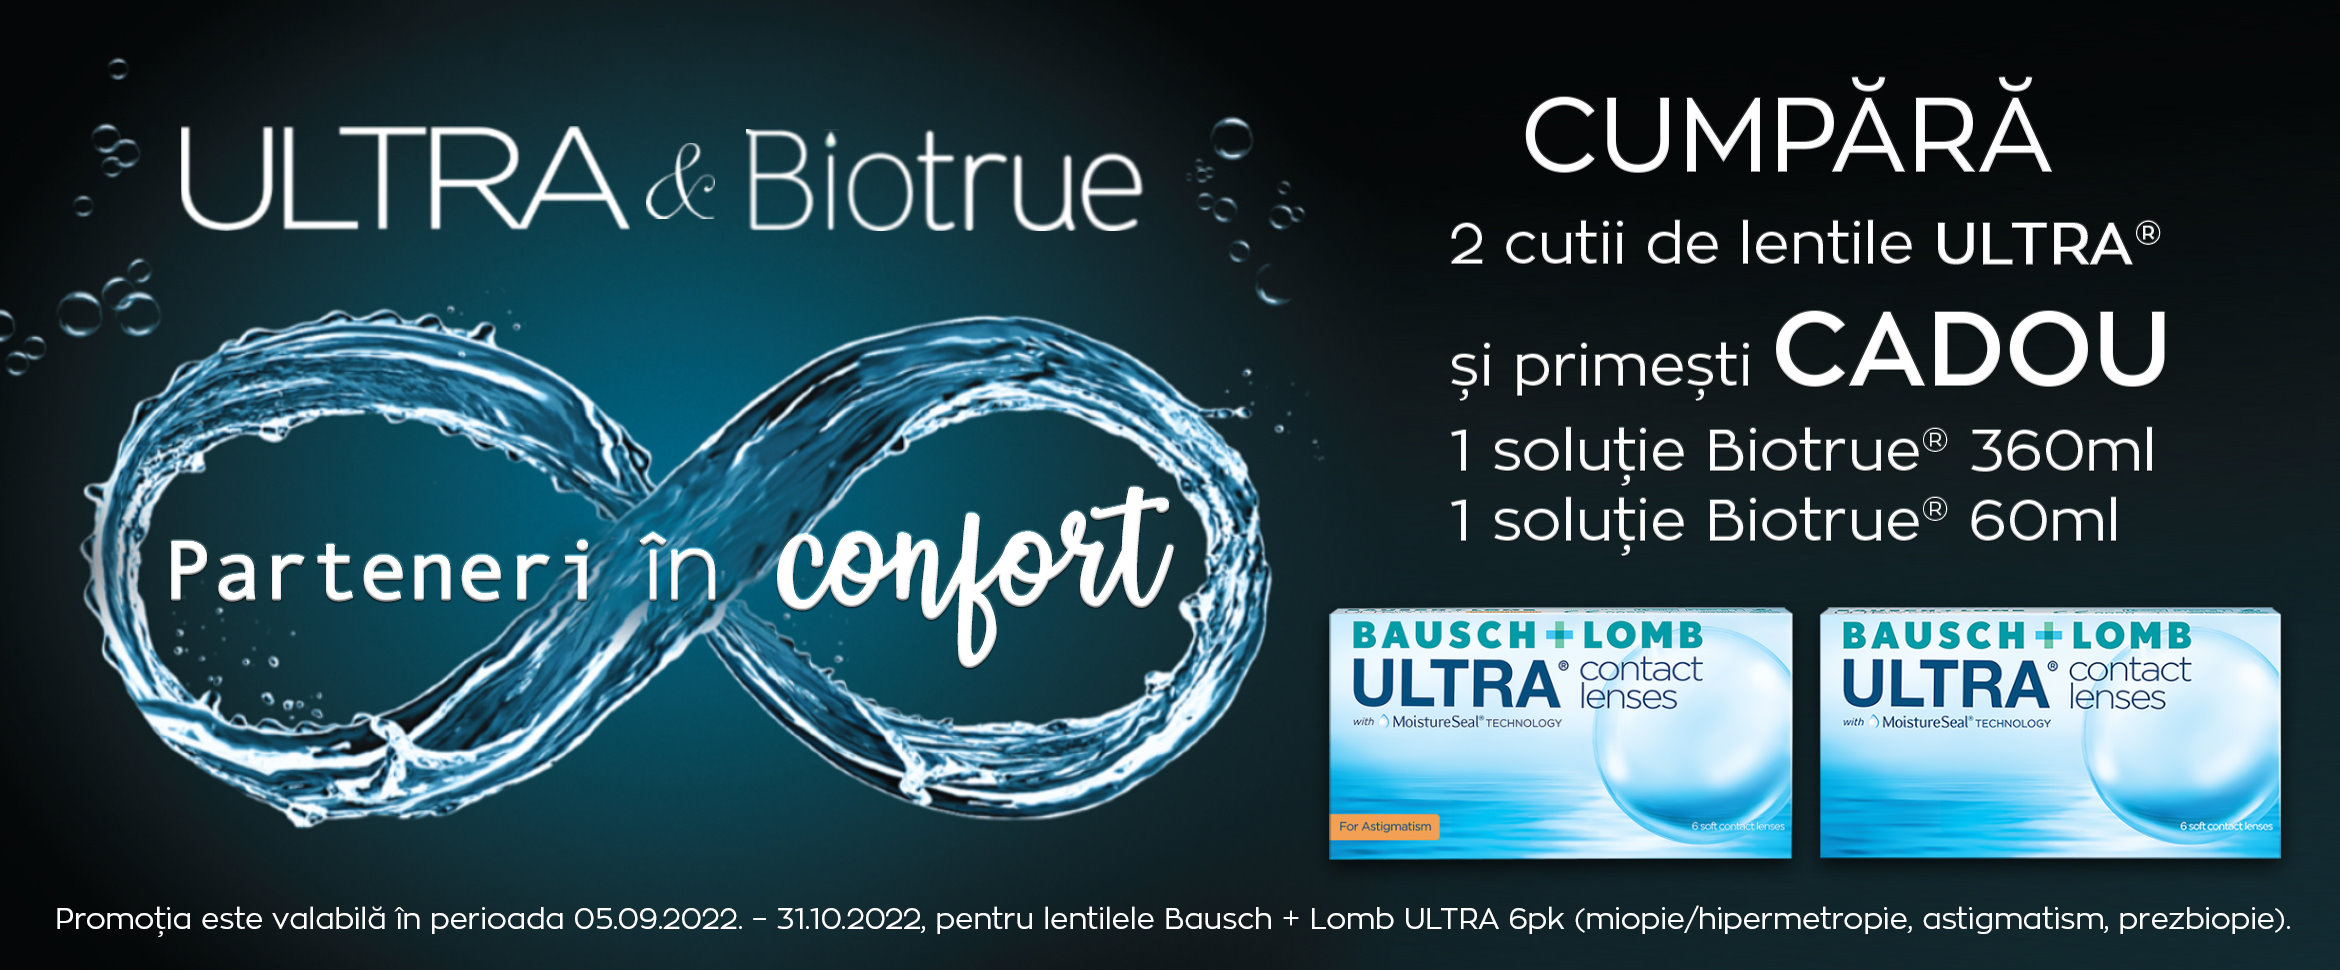 Promotie ULTRA&Biotrue